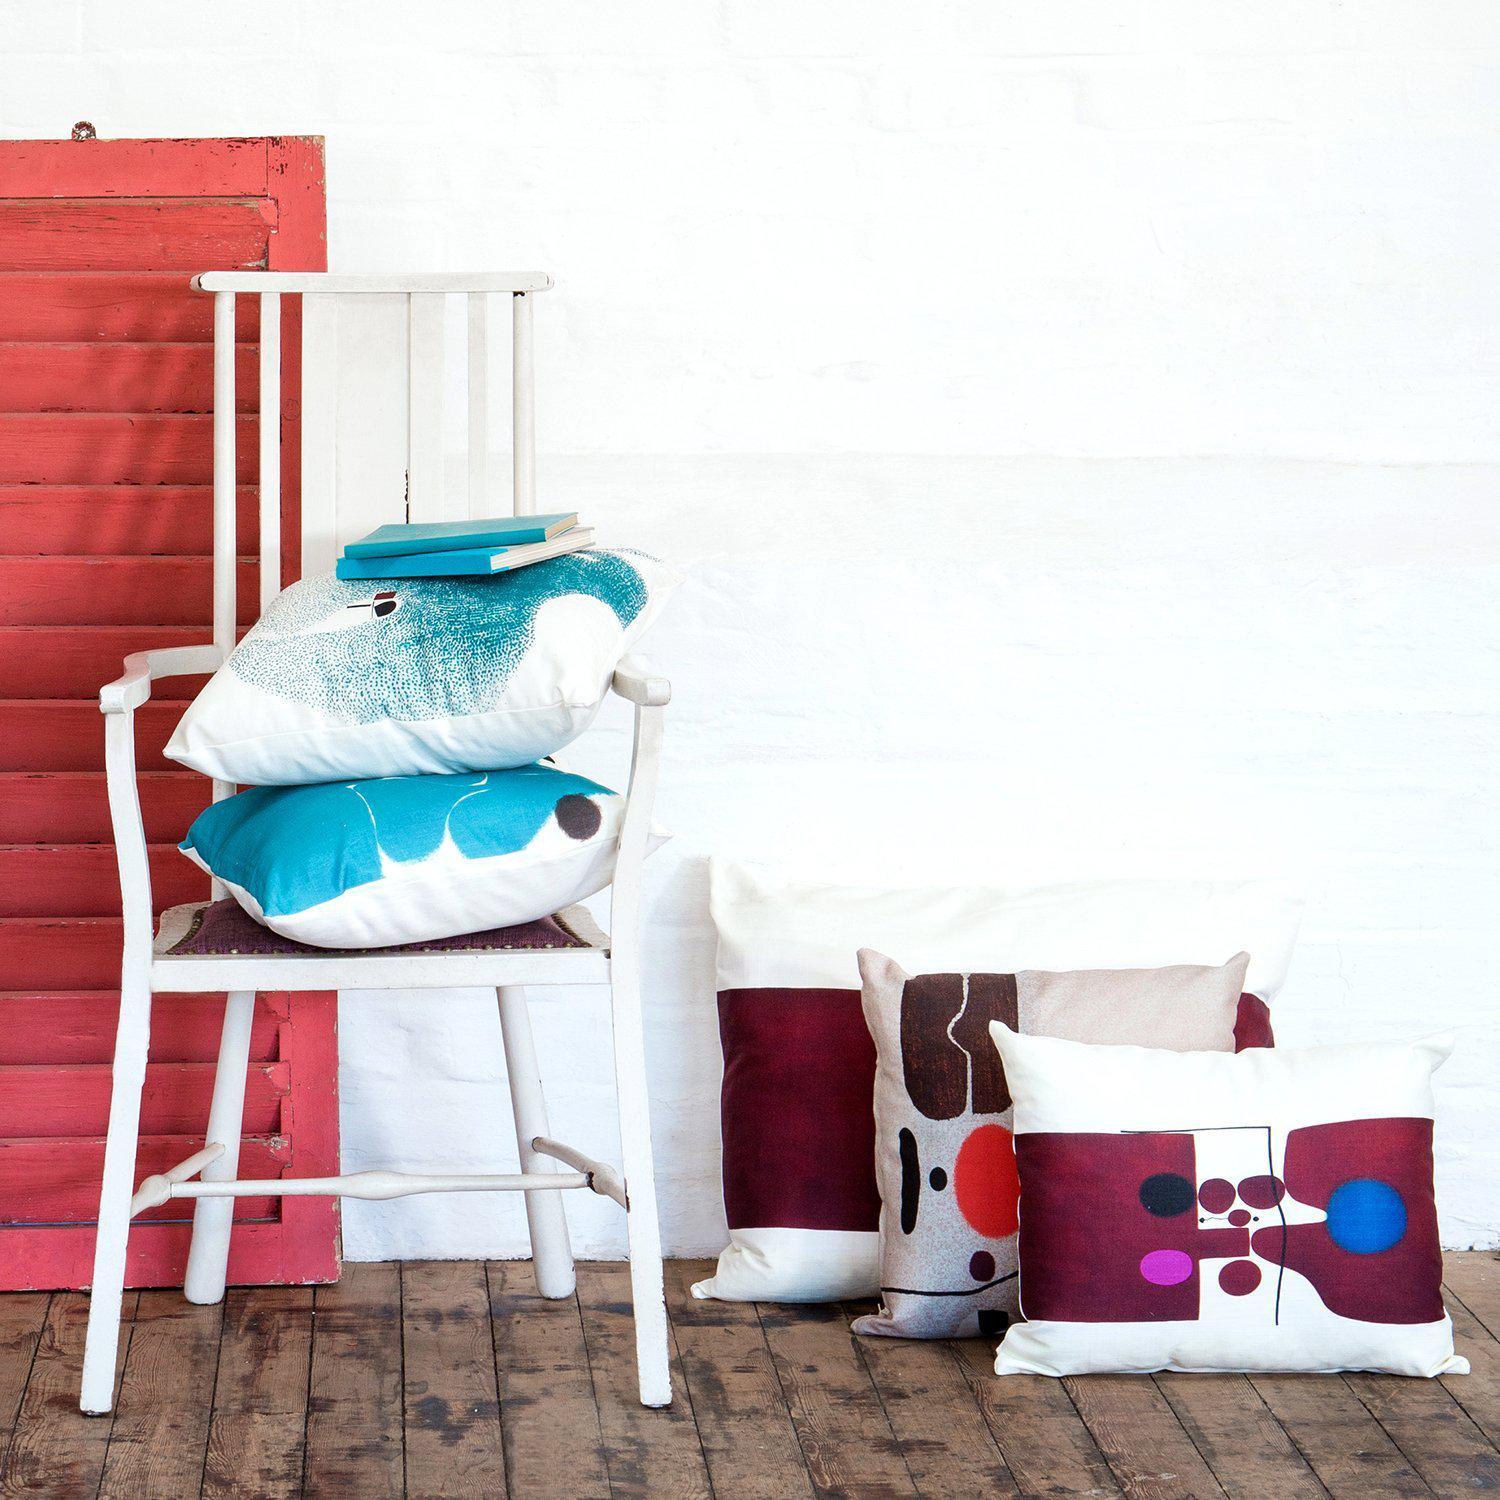 Blue Ship - Alfred Wallis - TATE Gallery Cushion - Handmade Cushions UK - WeLoveCushions